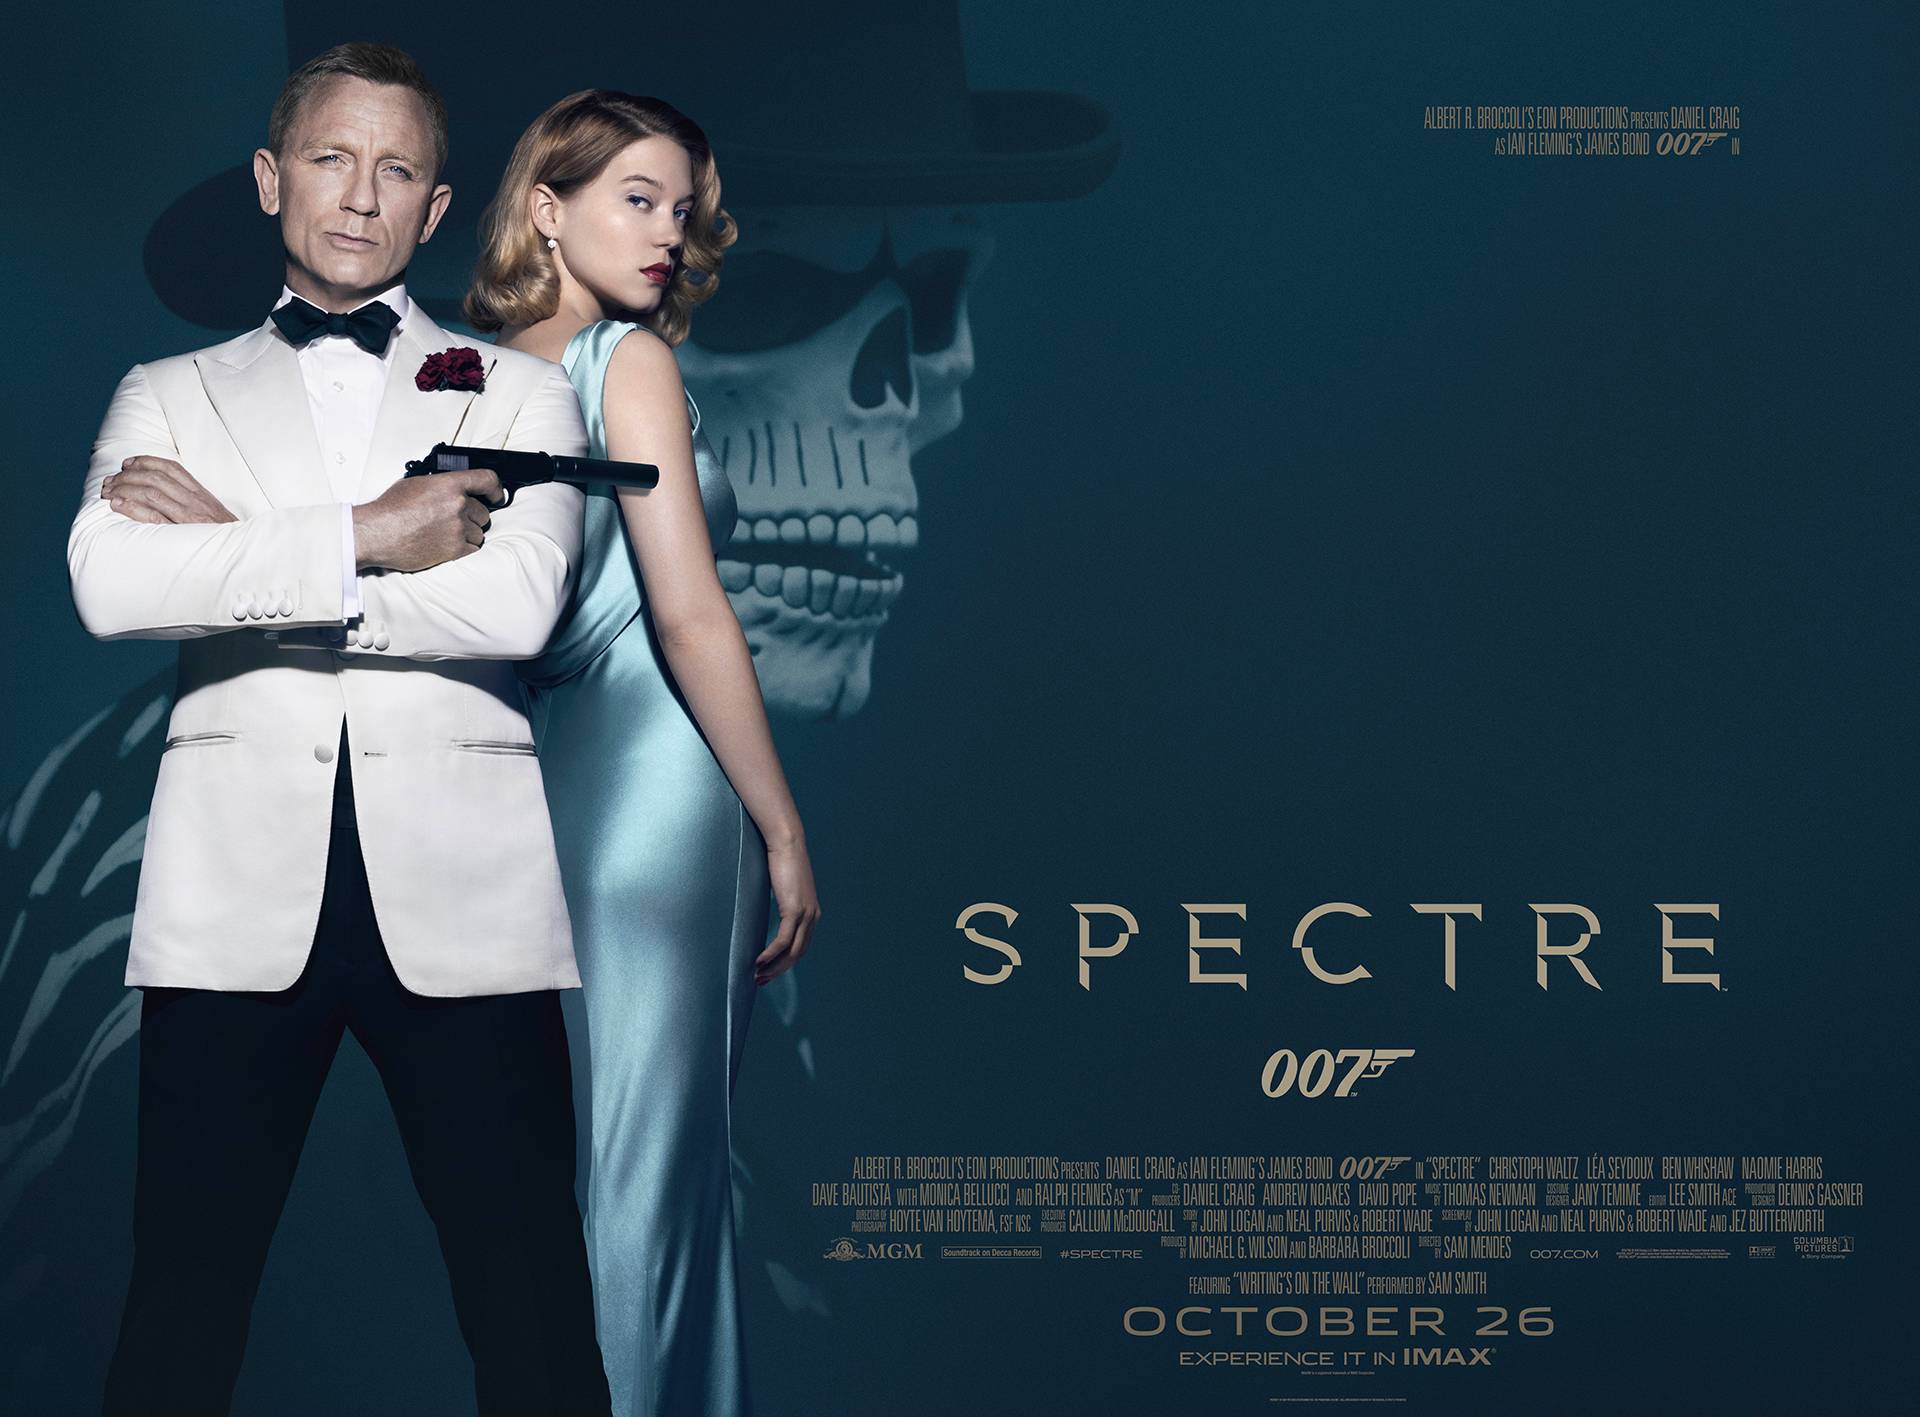 spectre 007 imdb